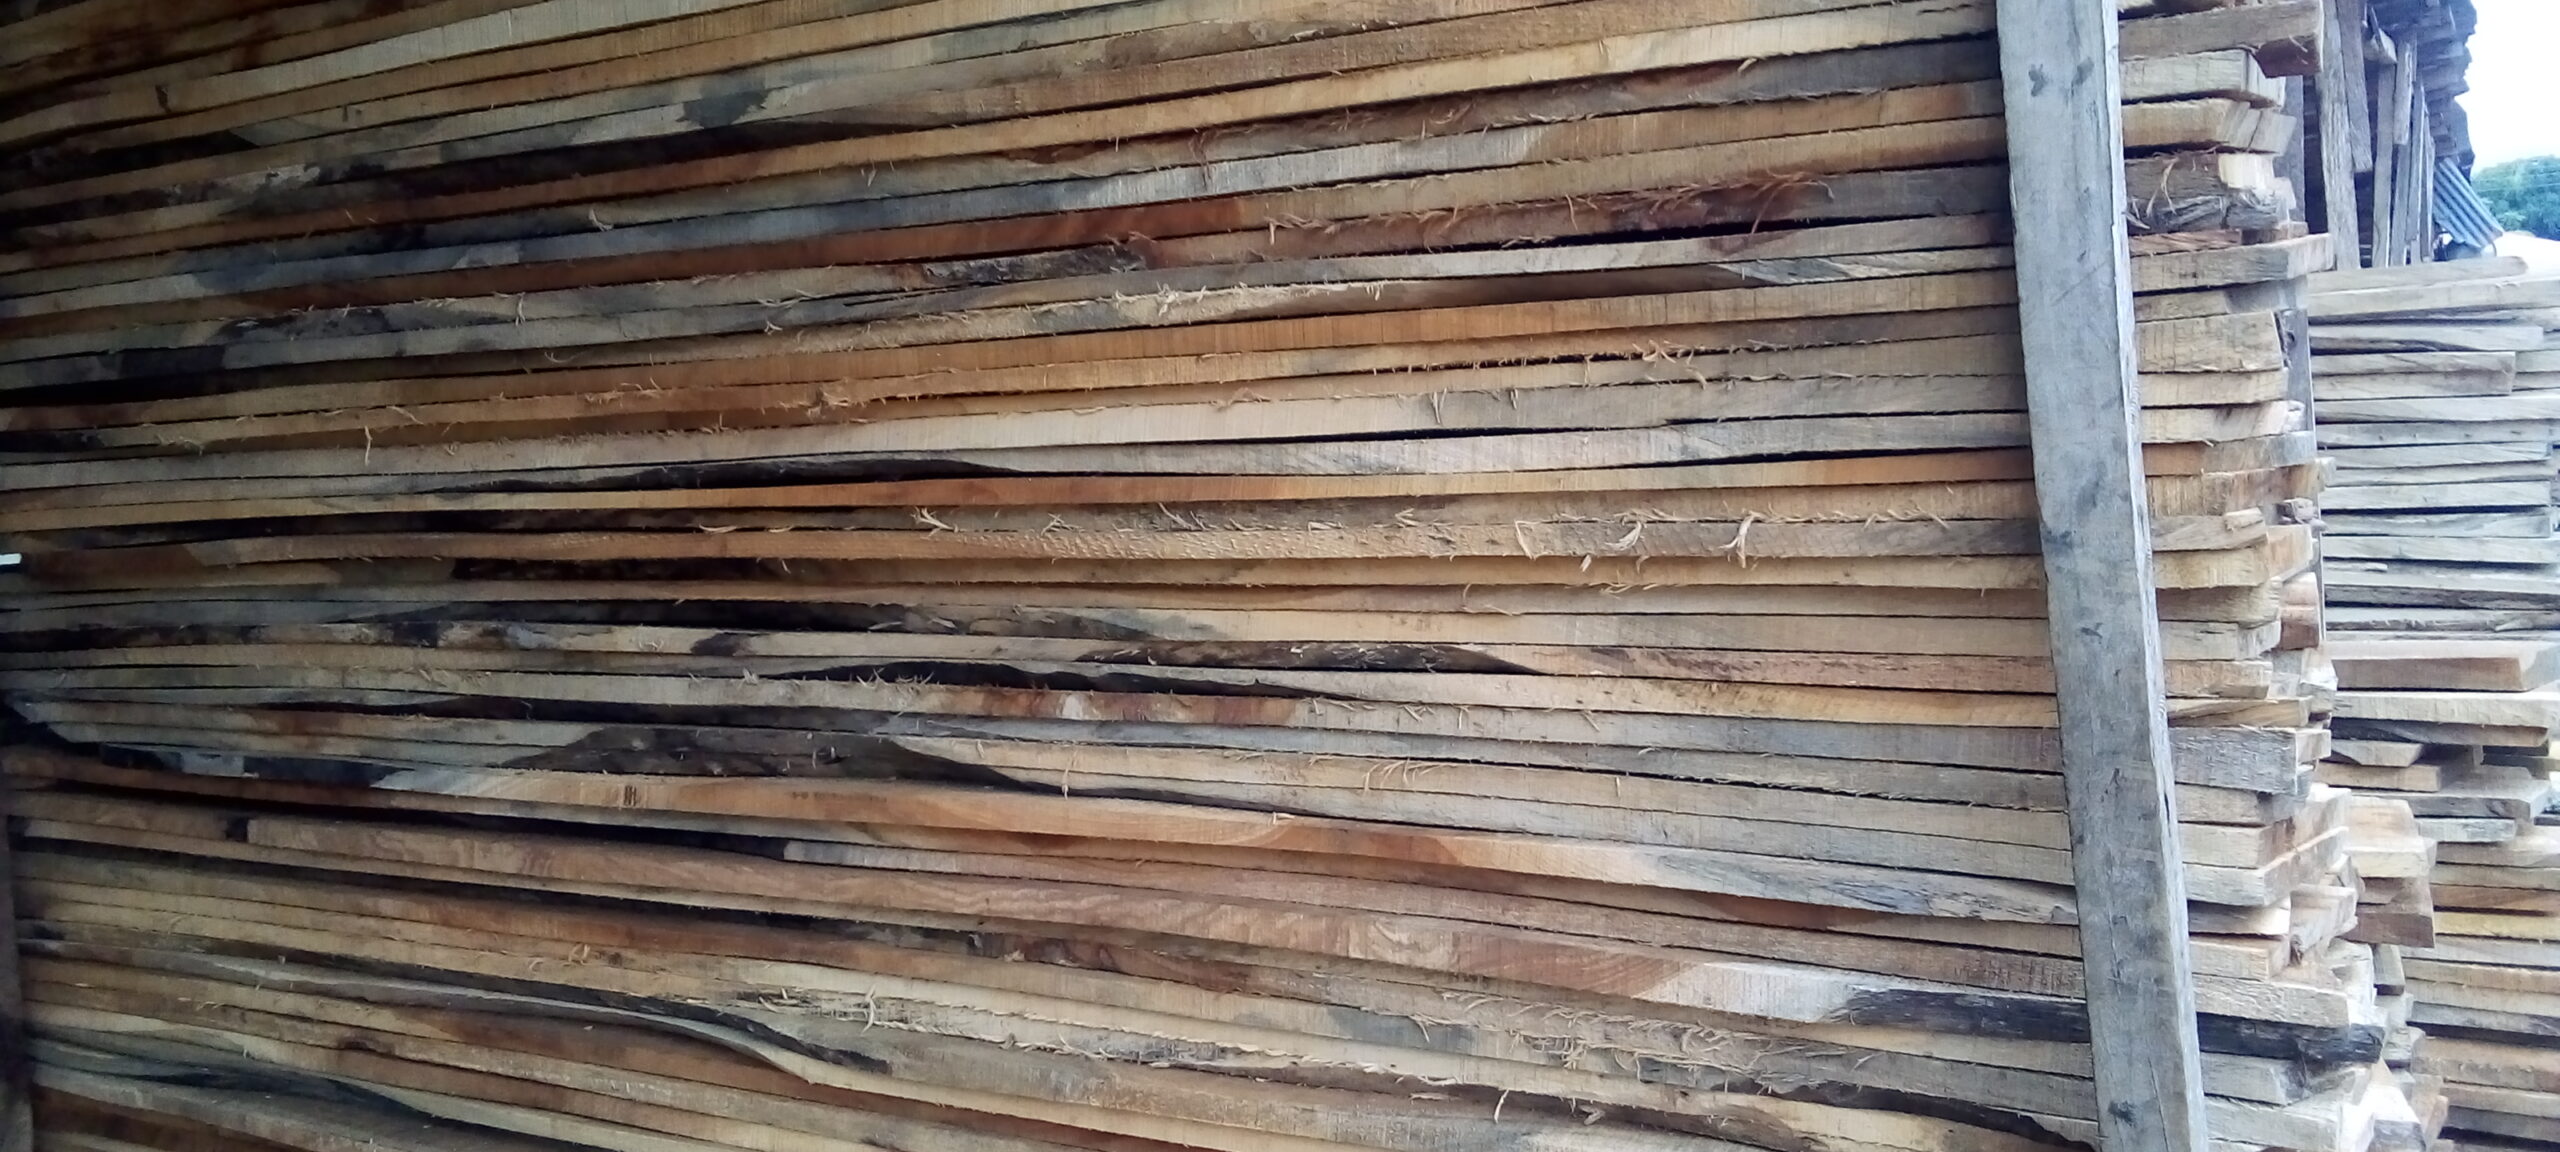 Cost of Wood, Planks, HDF, MDF Plywood in Nigeria 2022